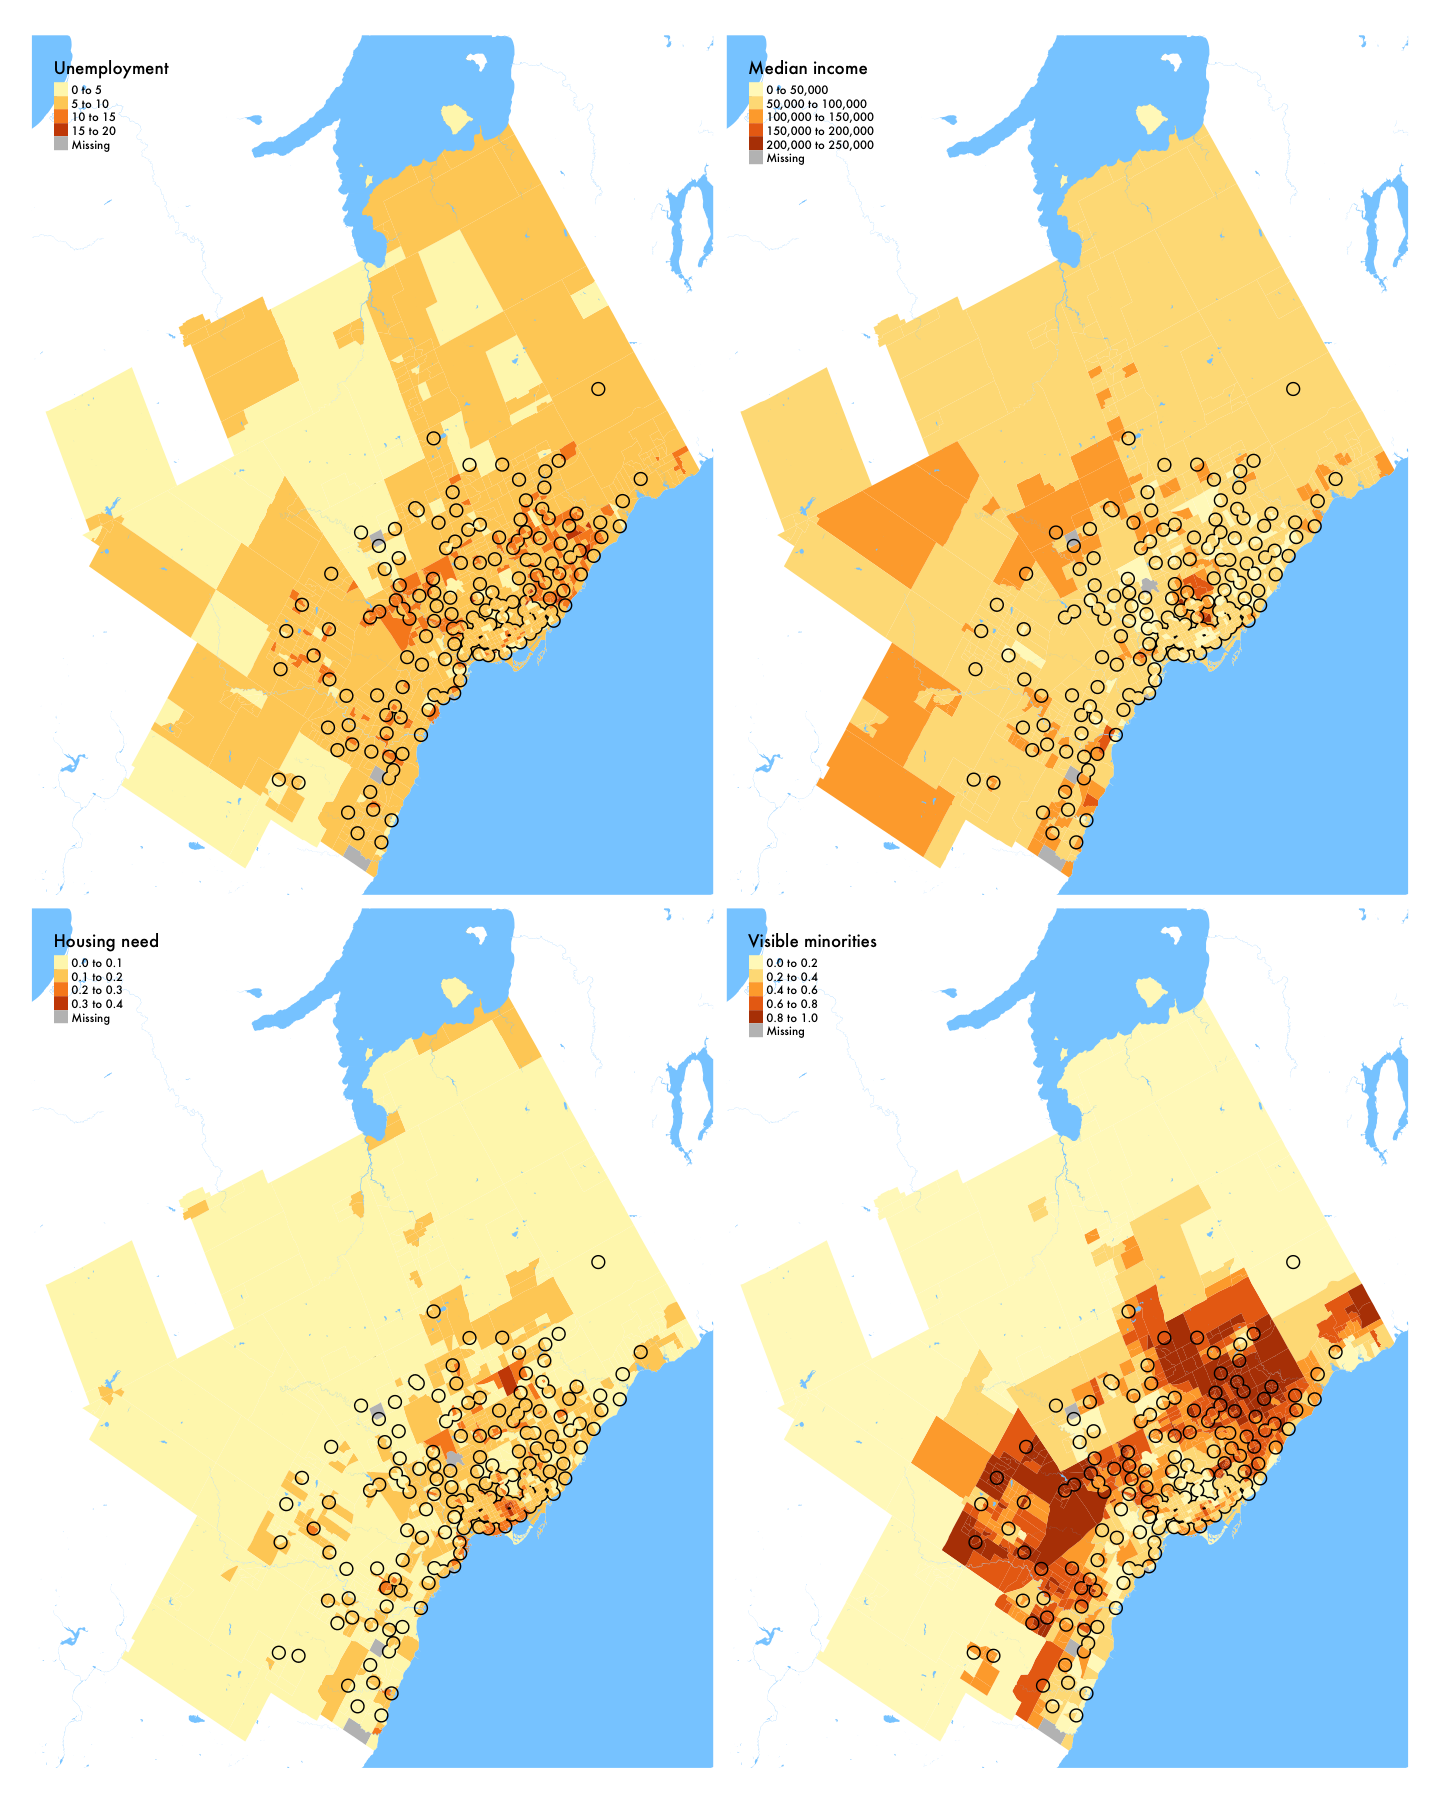 Demographic variables in Toronto (region), 2016